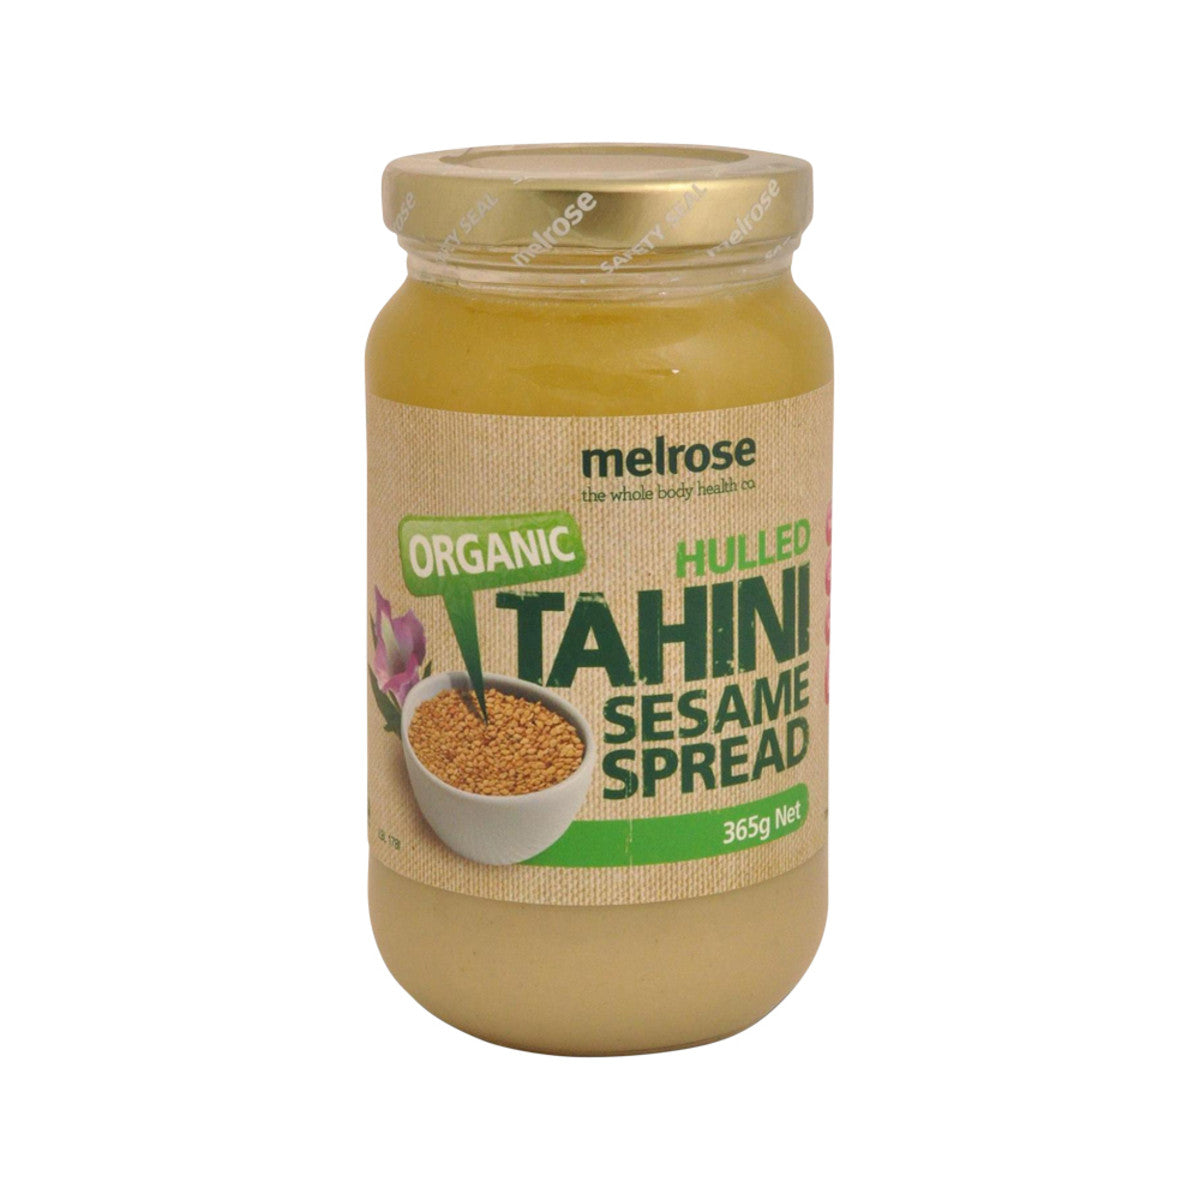 Melrose Organic Tahini Sesame Spread Hulled 365g-The Living Co.